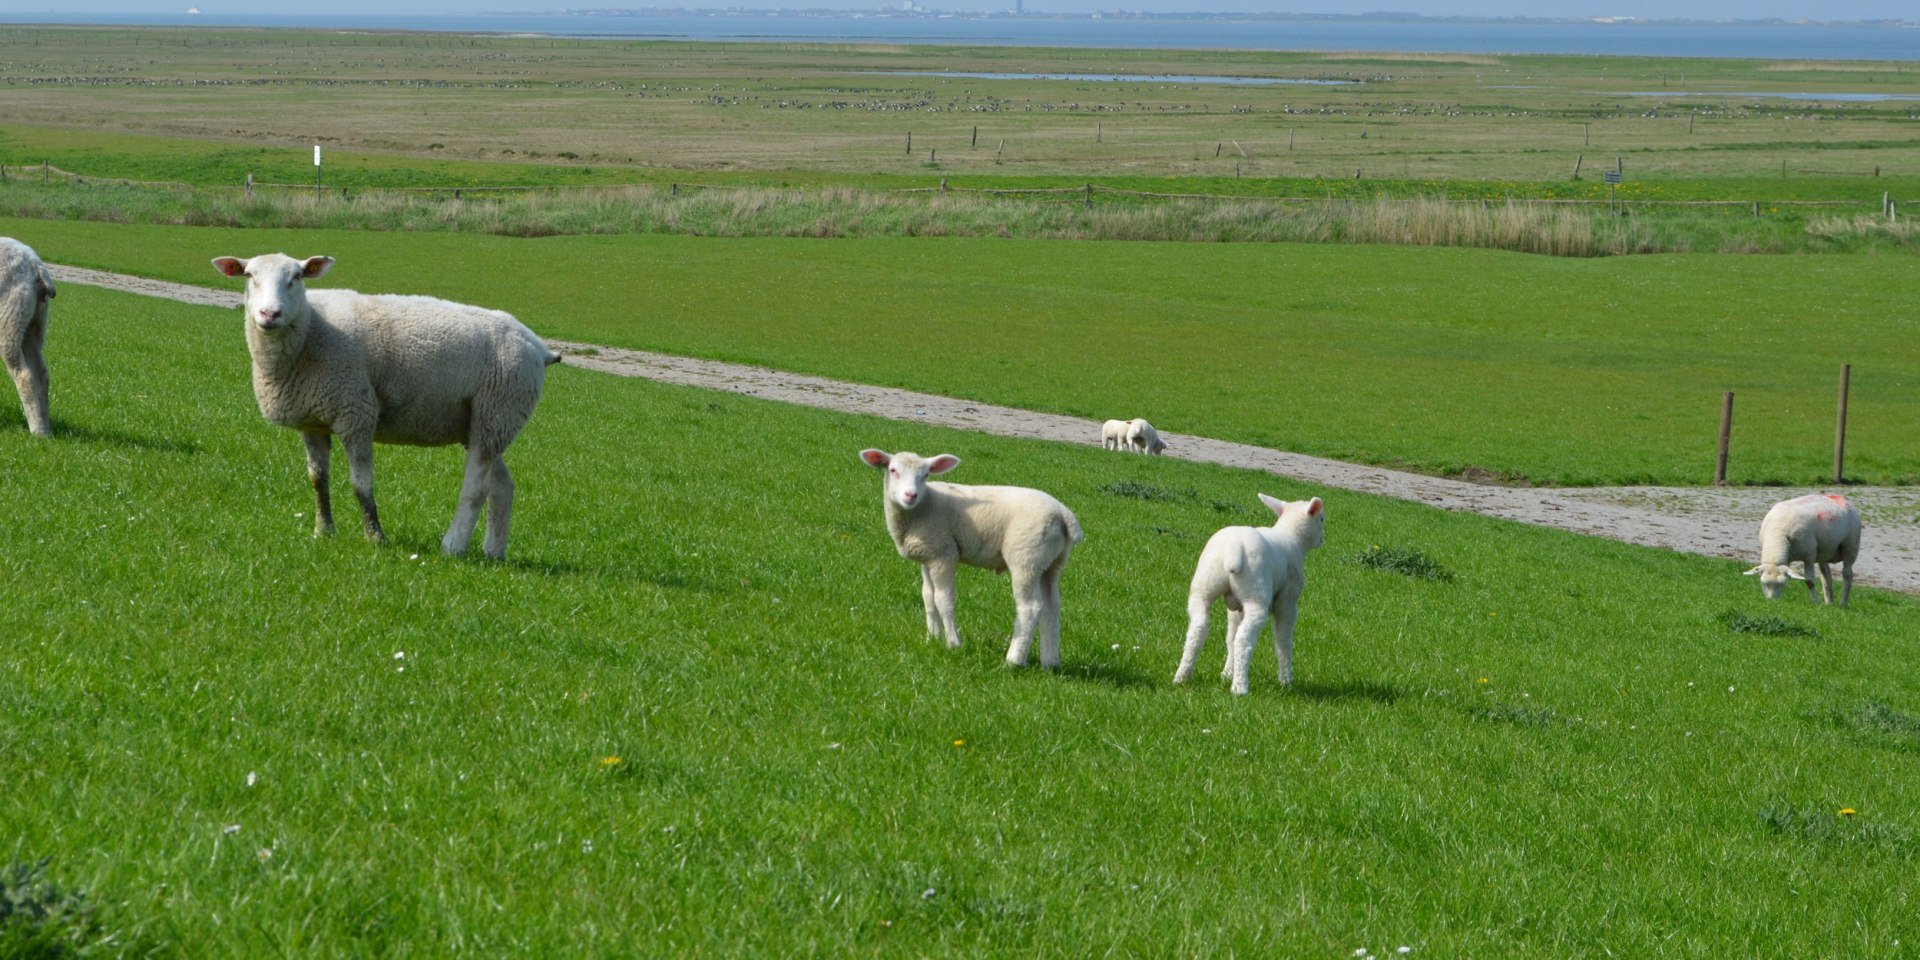 Sheep on the dike at Norden-Norddeich, © Ostfriesland Tourismus GmbH/www.ostfriesland.de